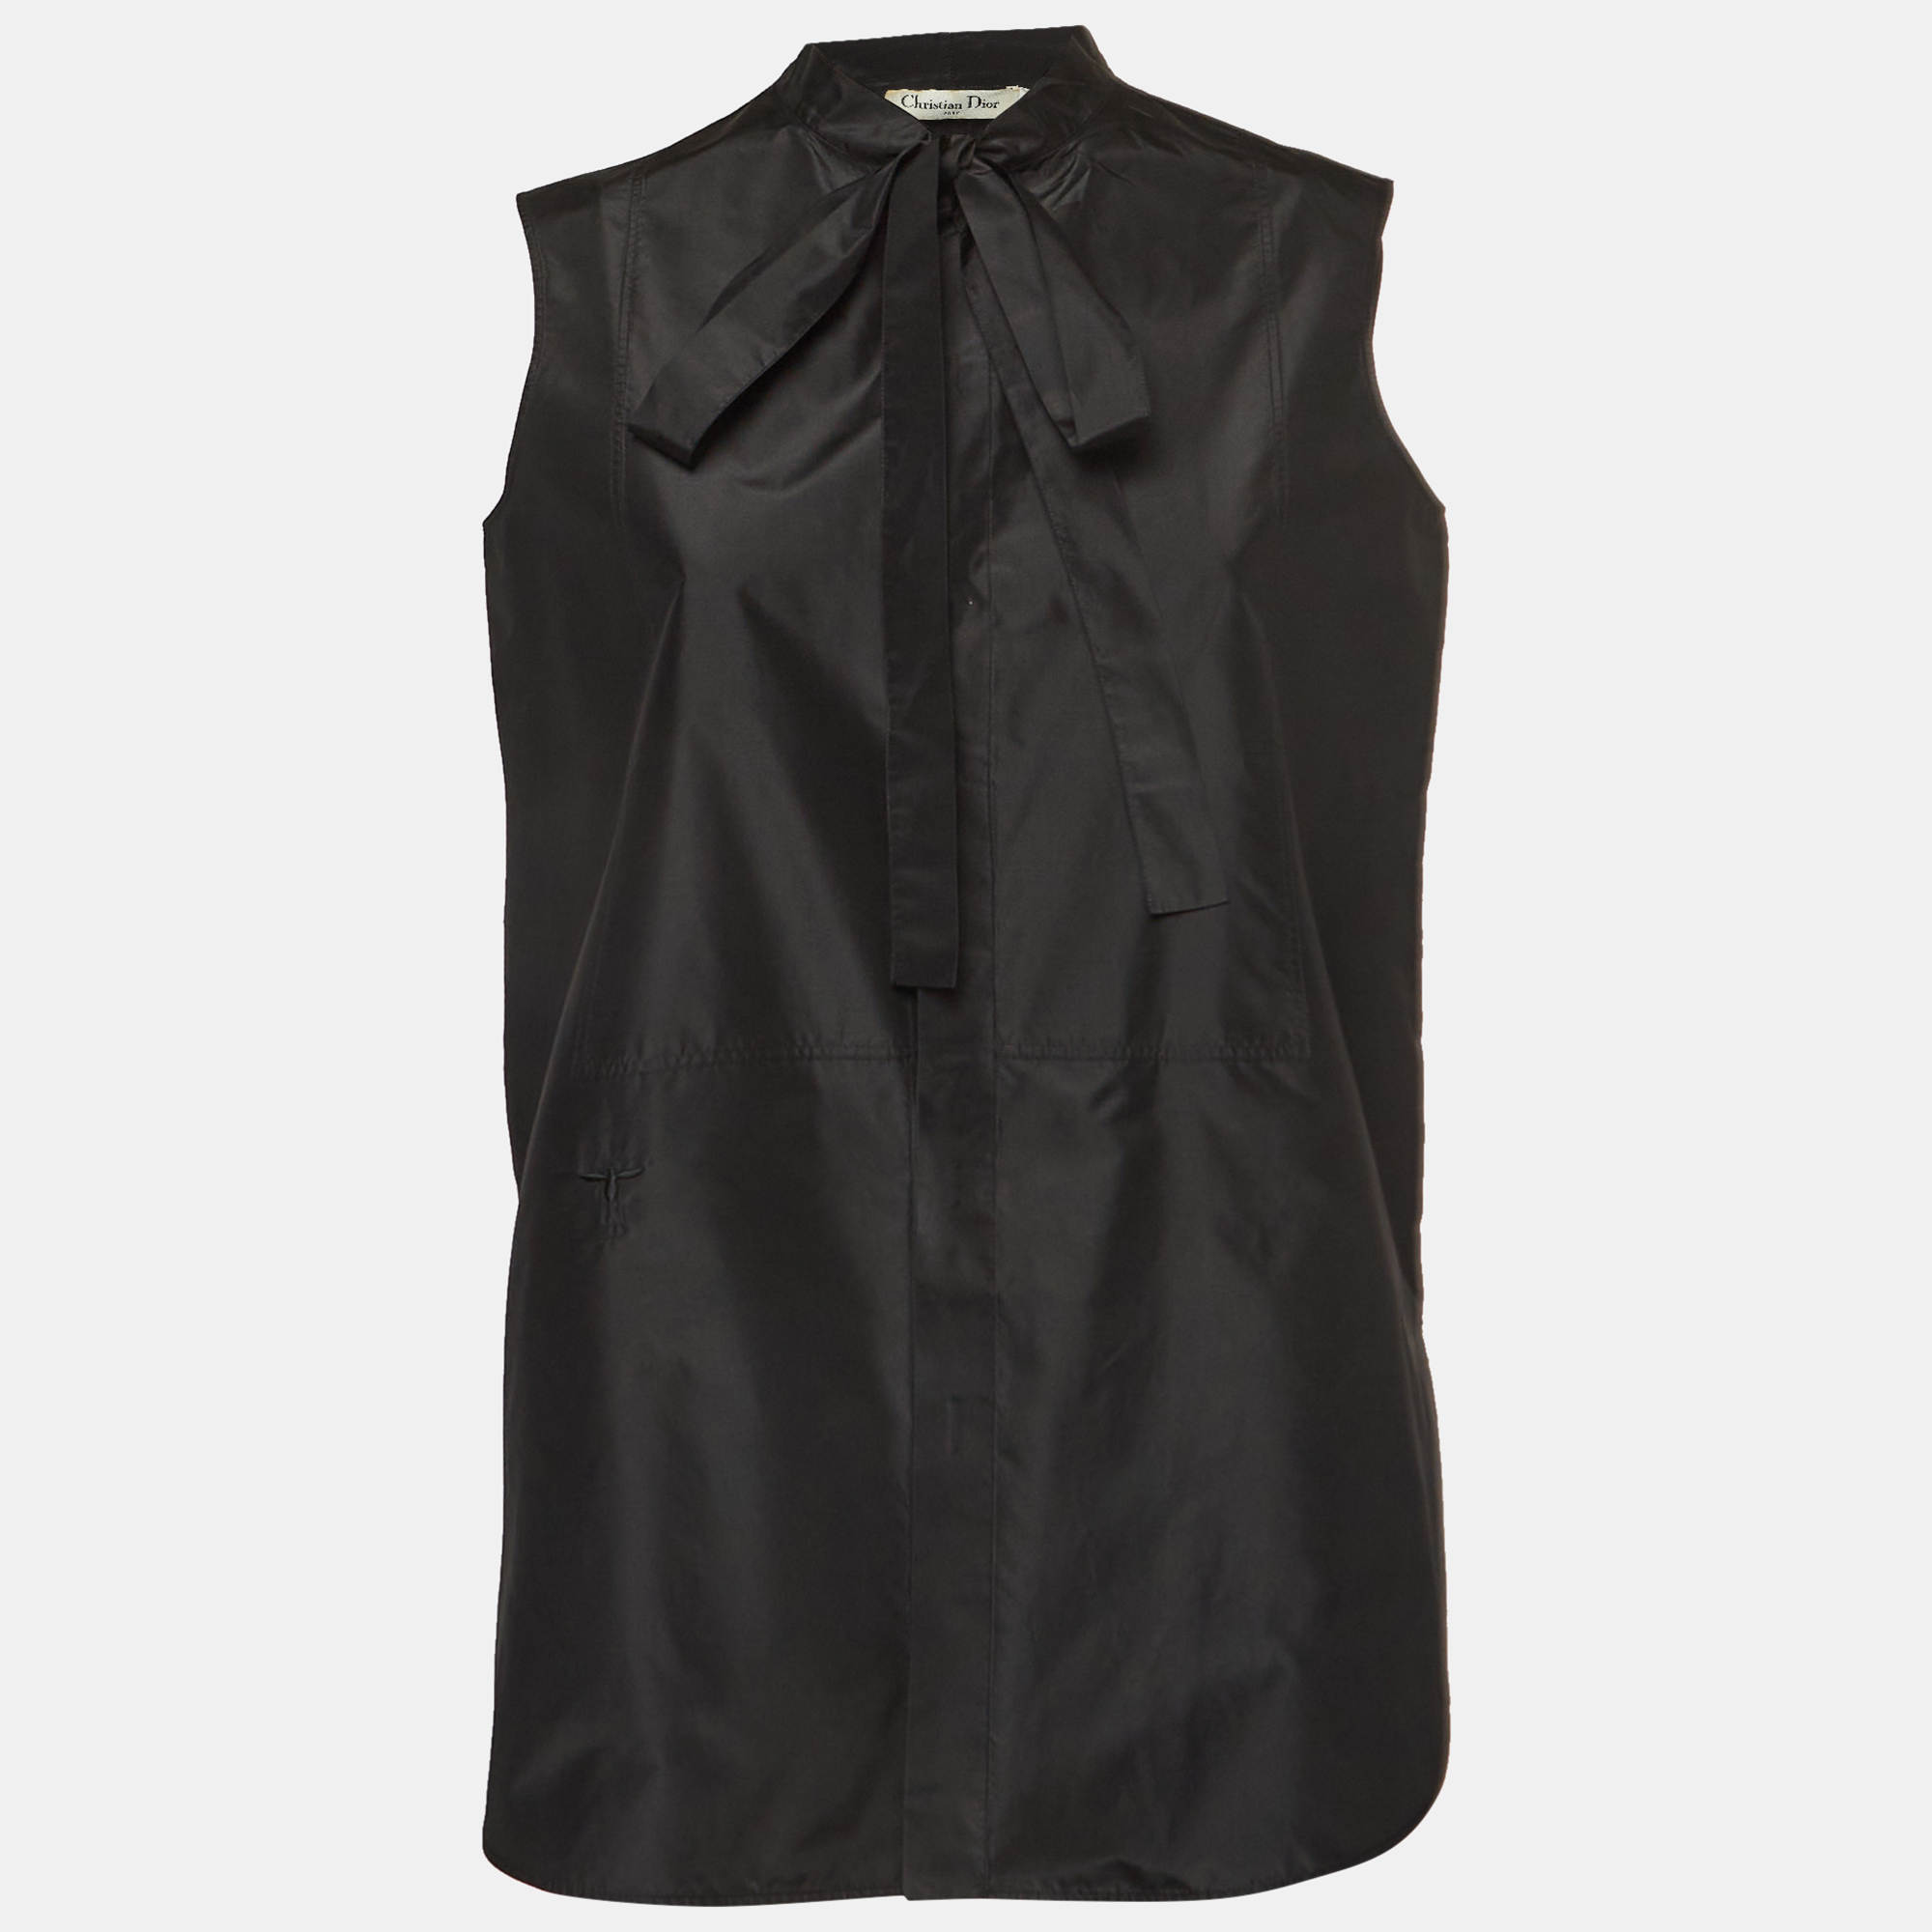 Christian dior black silk sleeveless shirt s